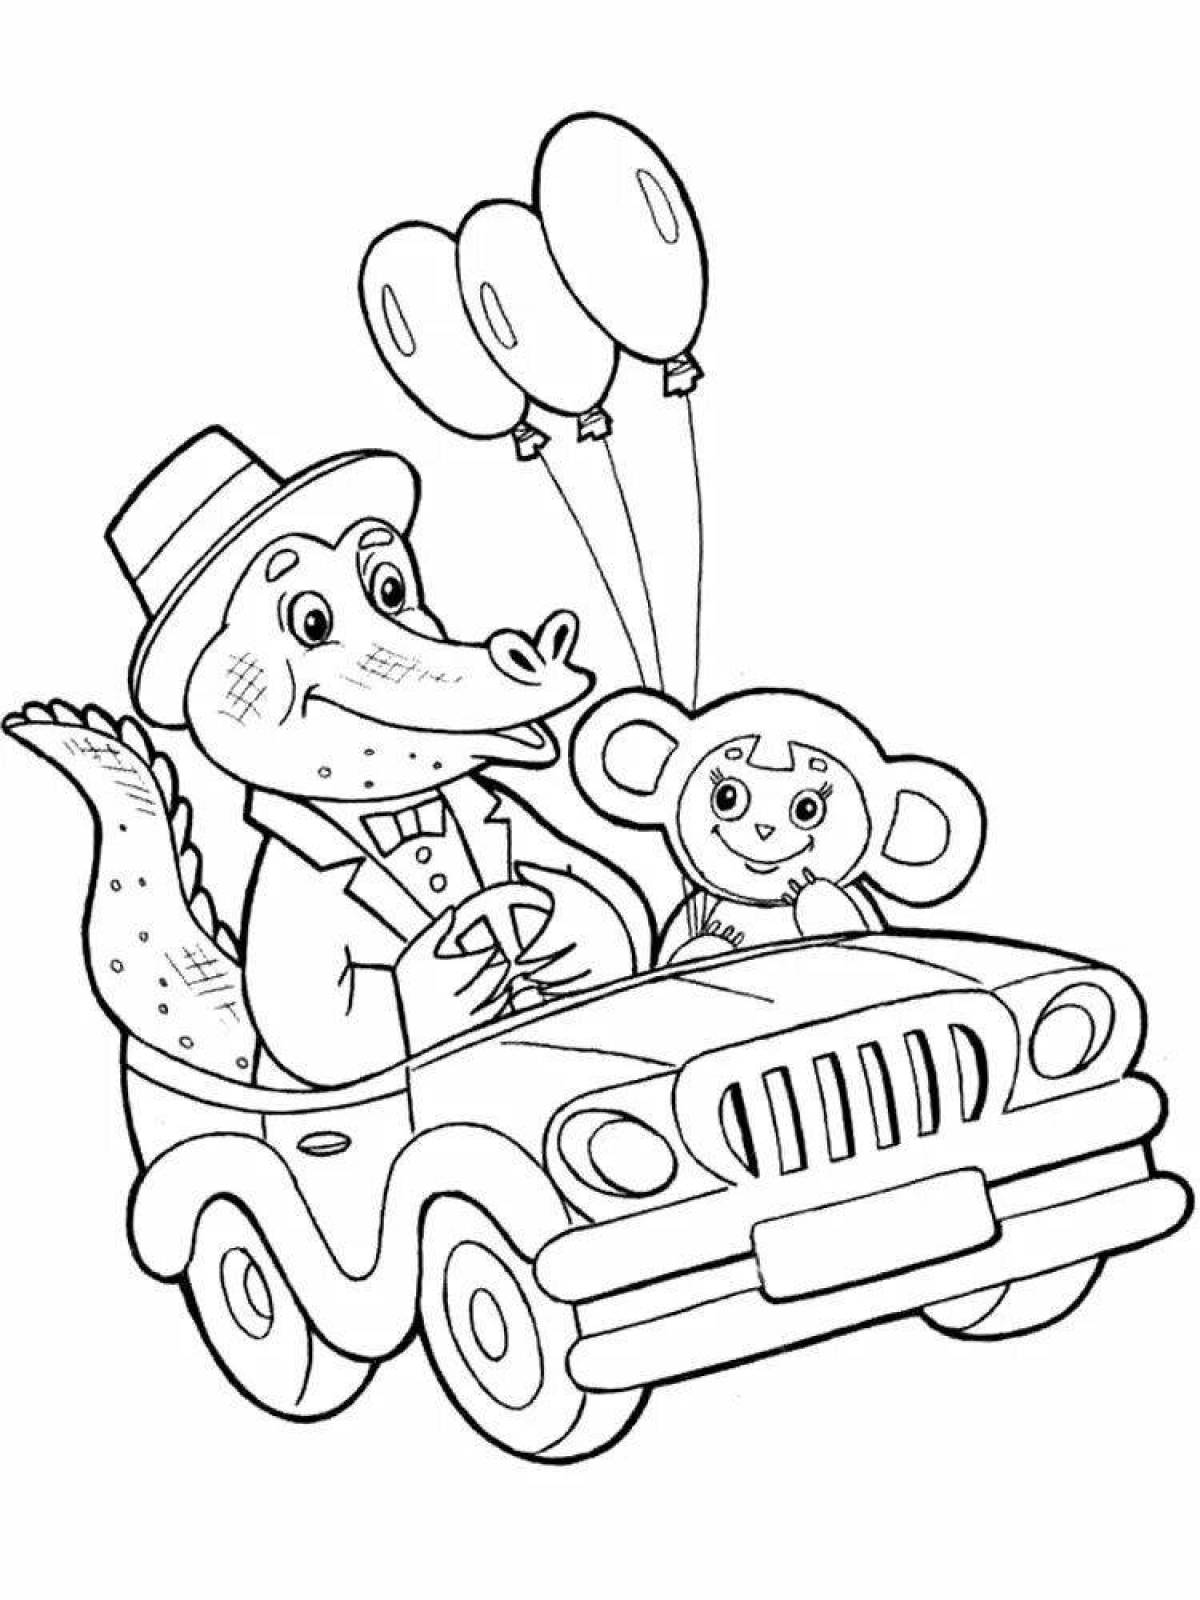 Fun coloring Cheburashka for children 5-6 years old